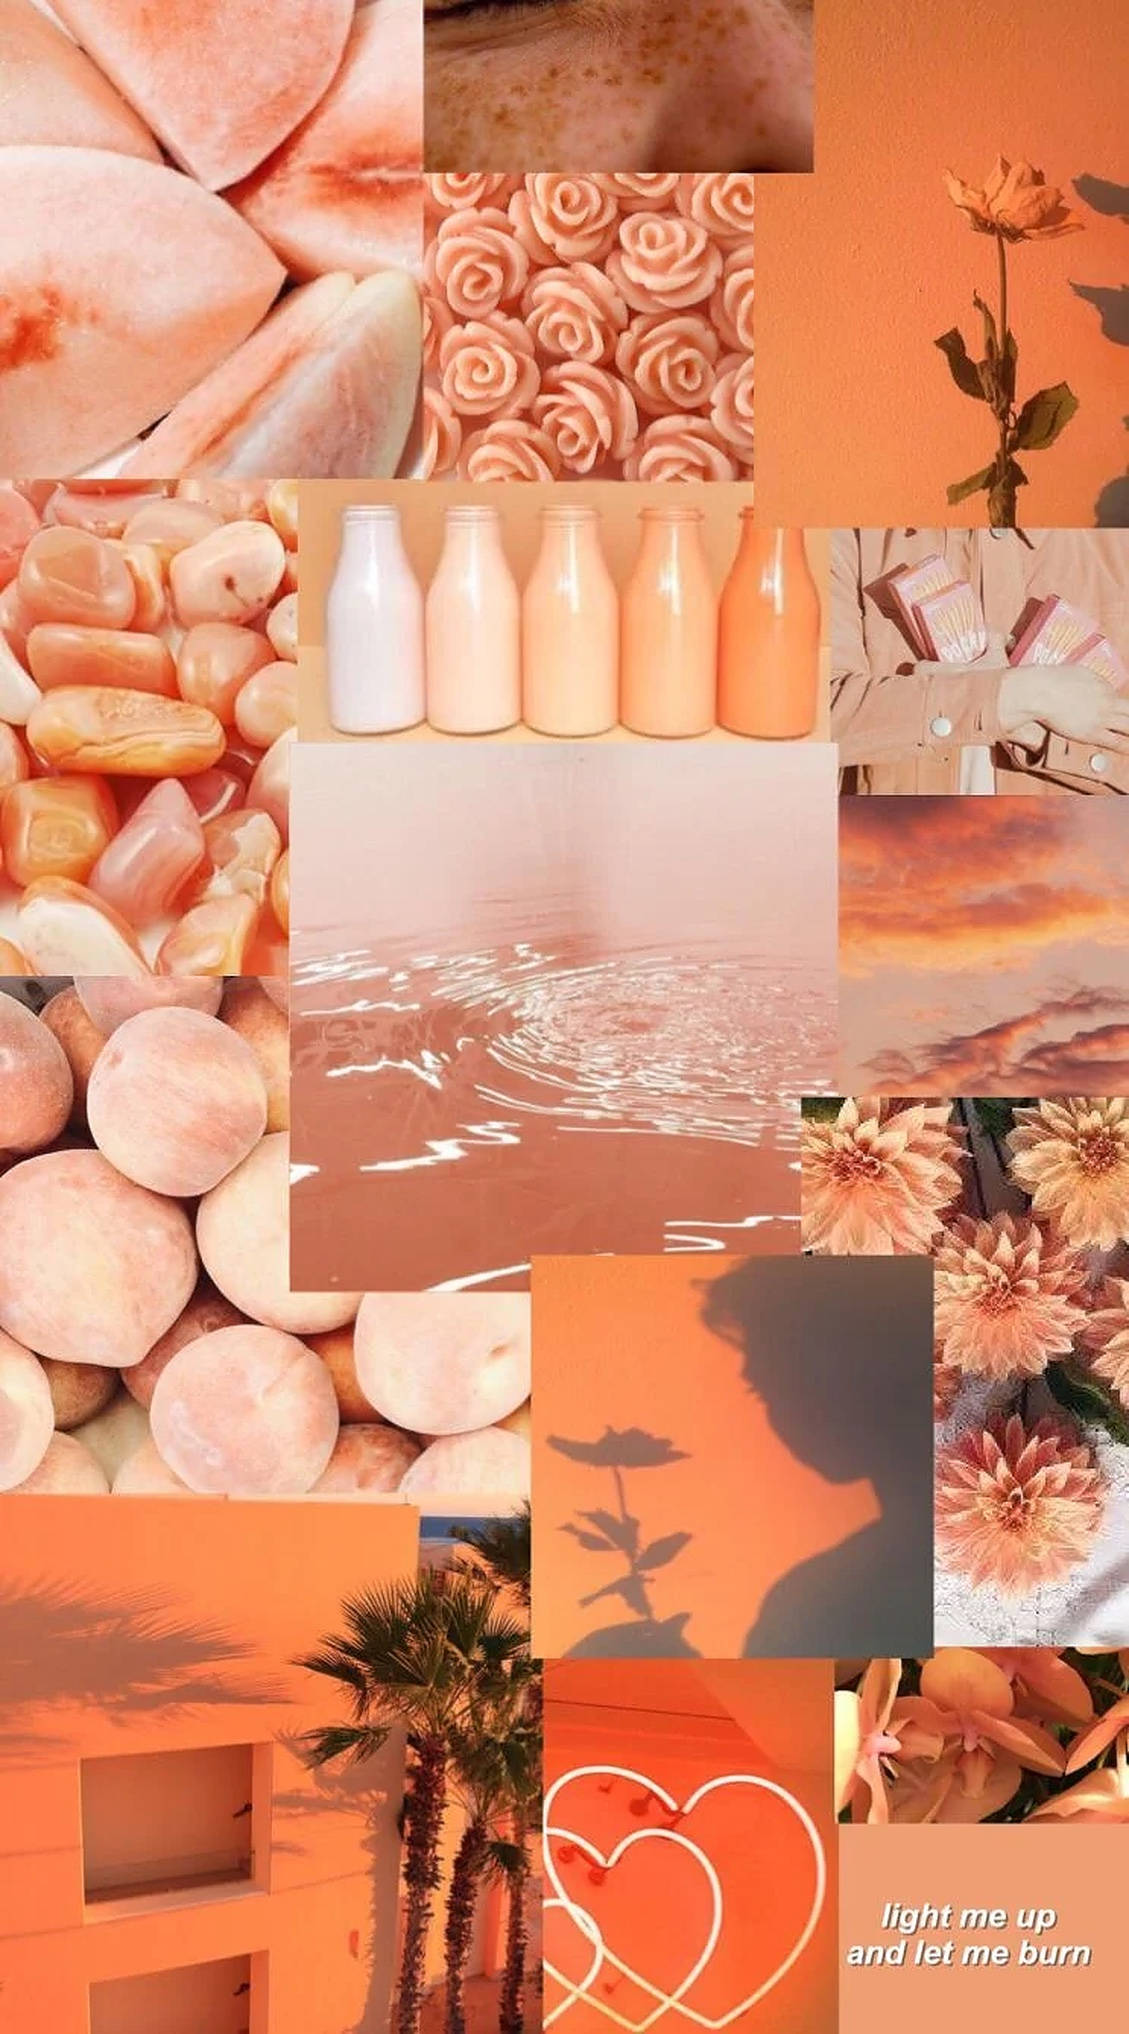 Aesthetic Pastel Orange Wallpapers